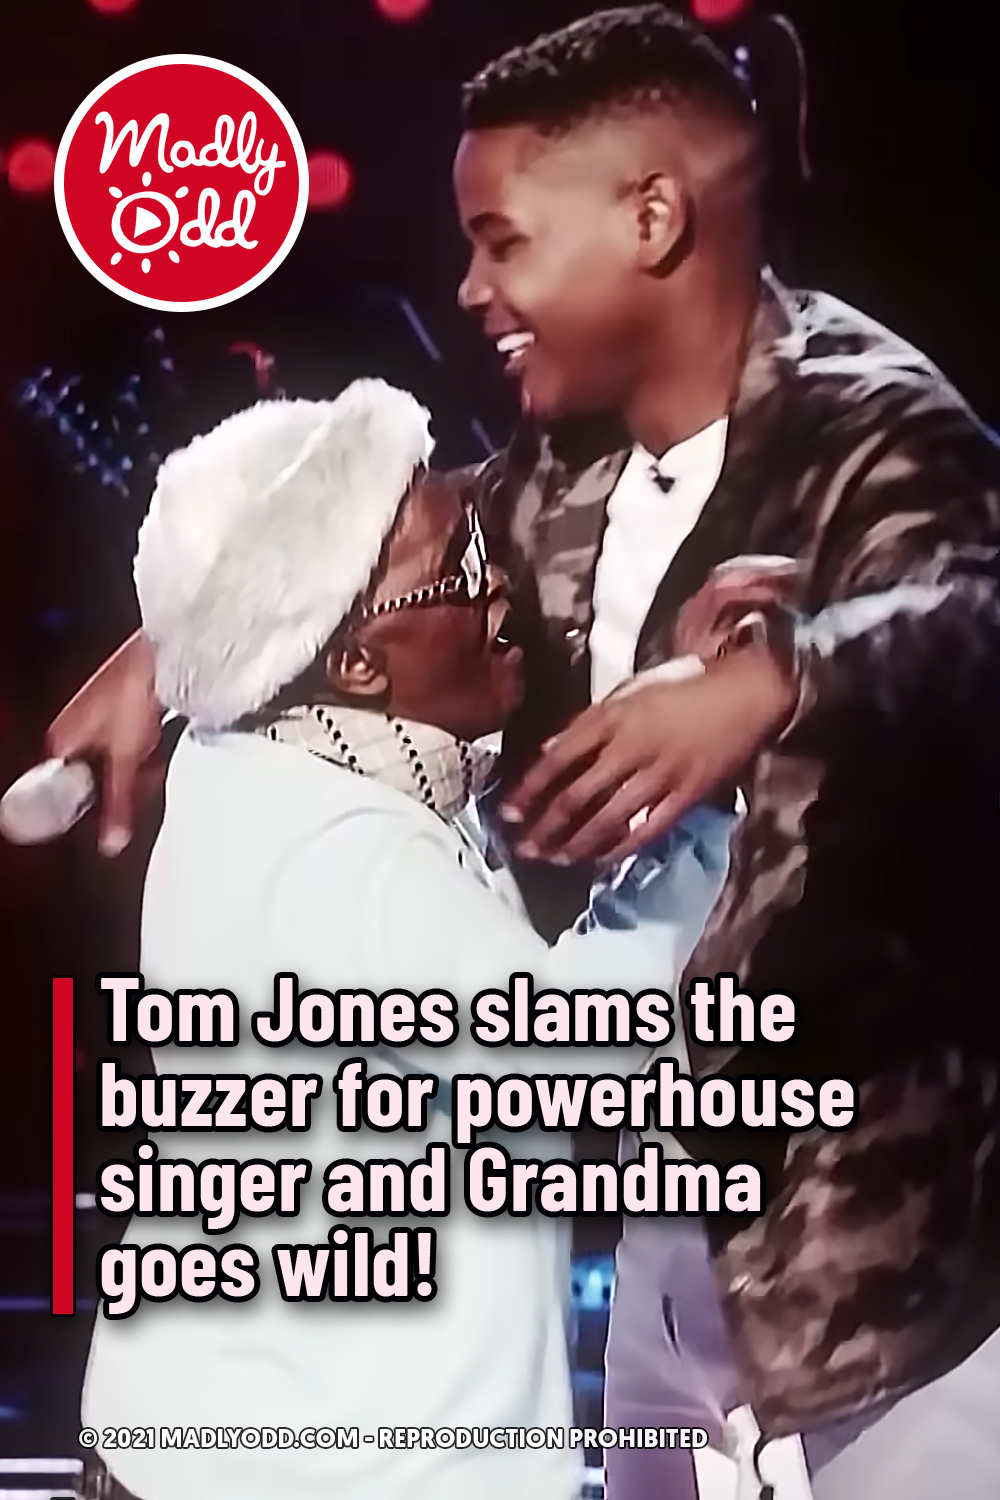 Tom Jones slams the buzzer for powerhouse singer and Grandma goes wild!